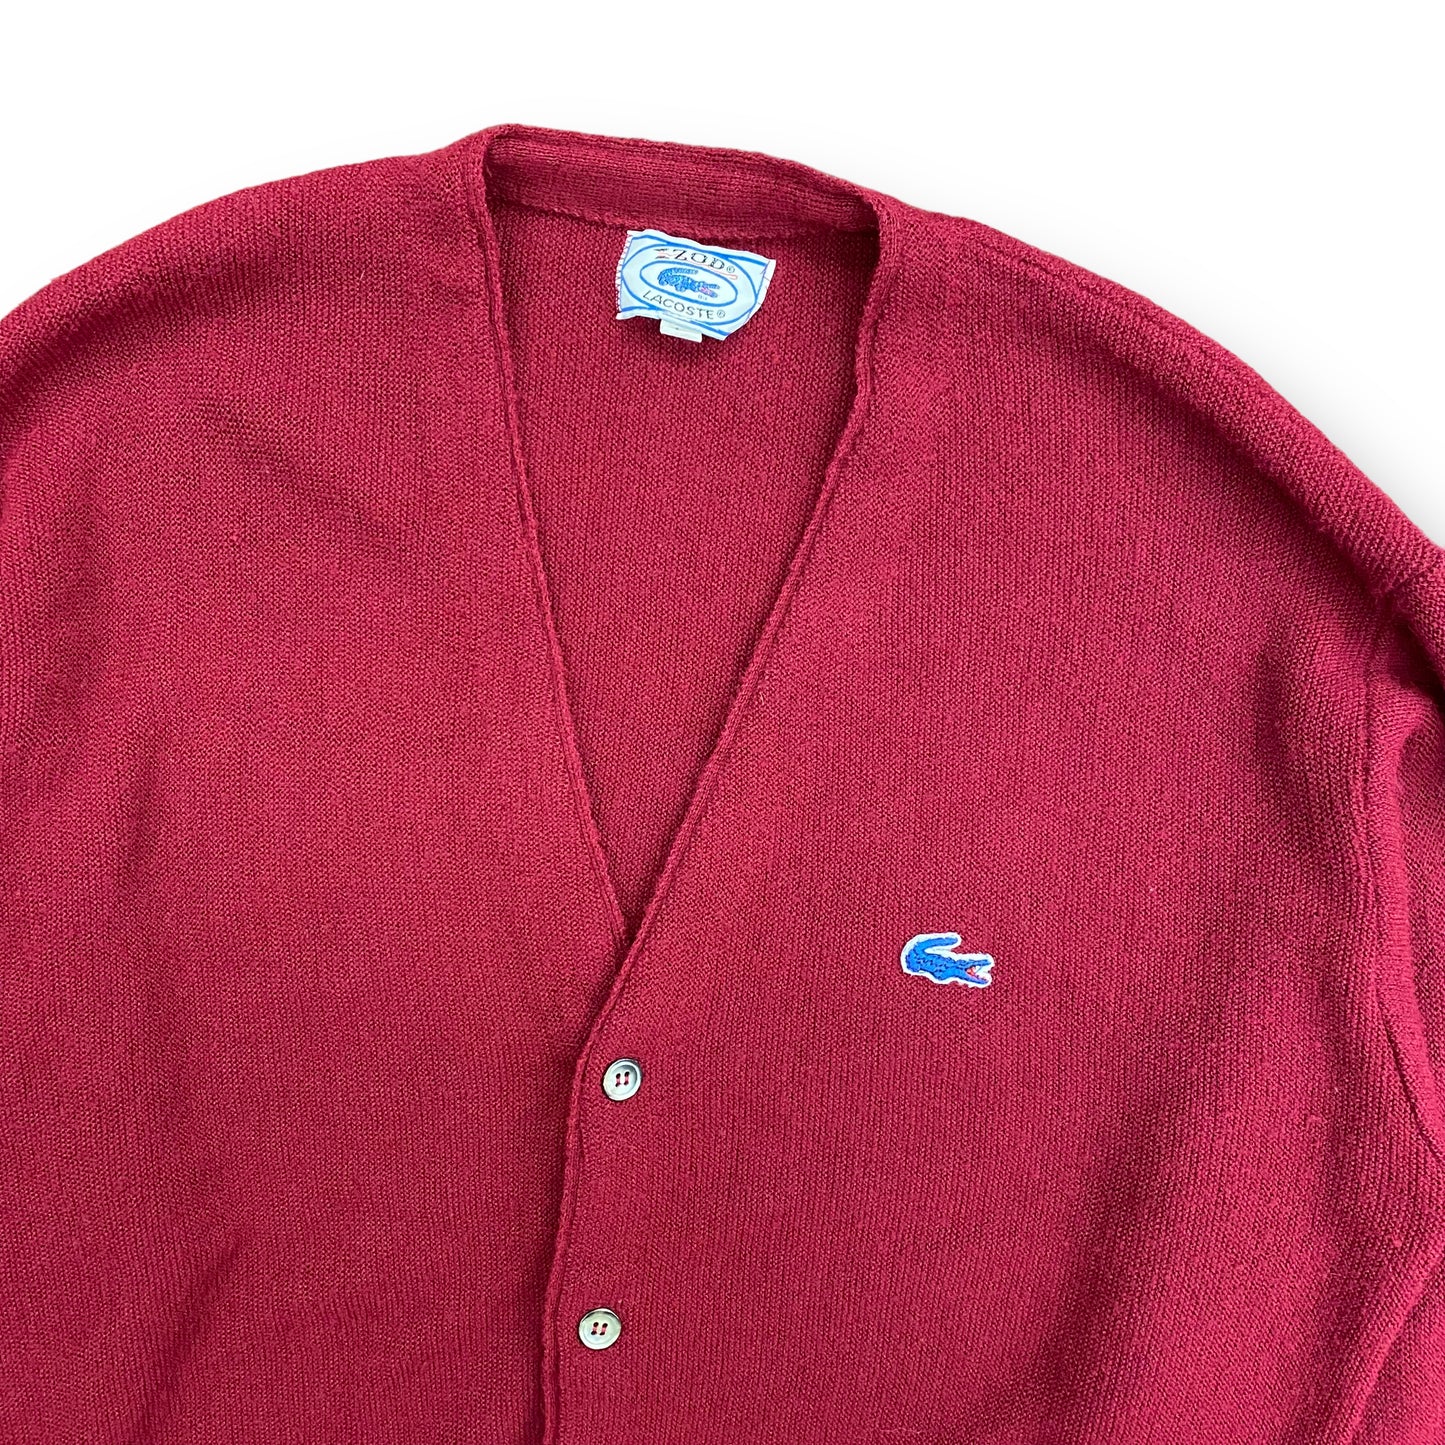 1970s Vintage Izod Lacoste Maroon Cardigan Sweater - Size Large